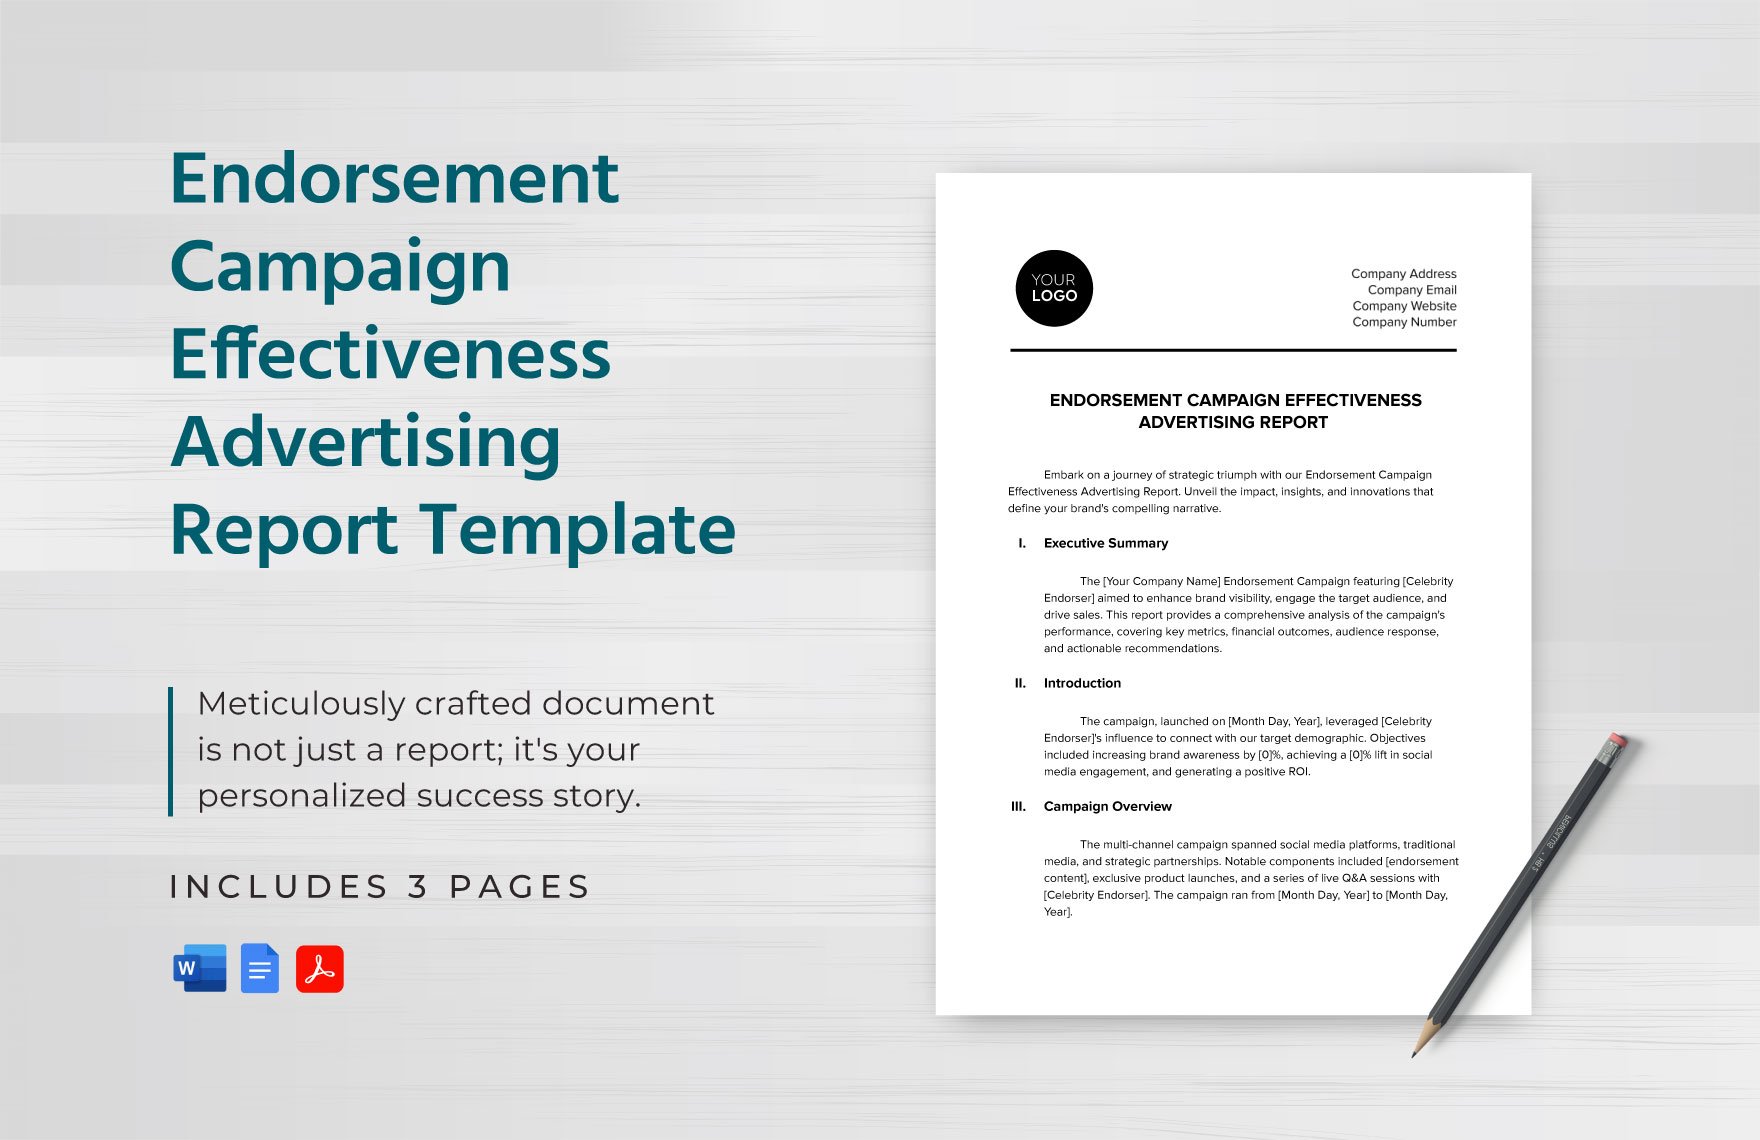 Endorsement Campaign Effectiveness Advertising Report Template